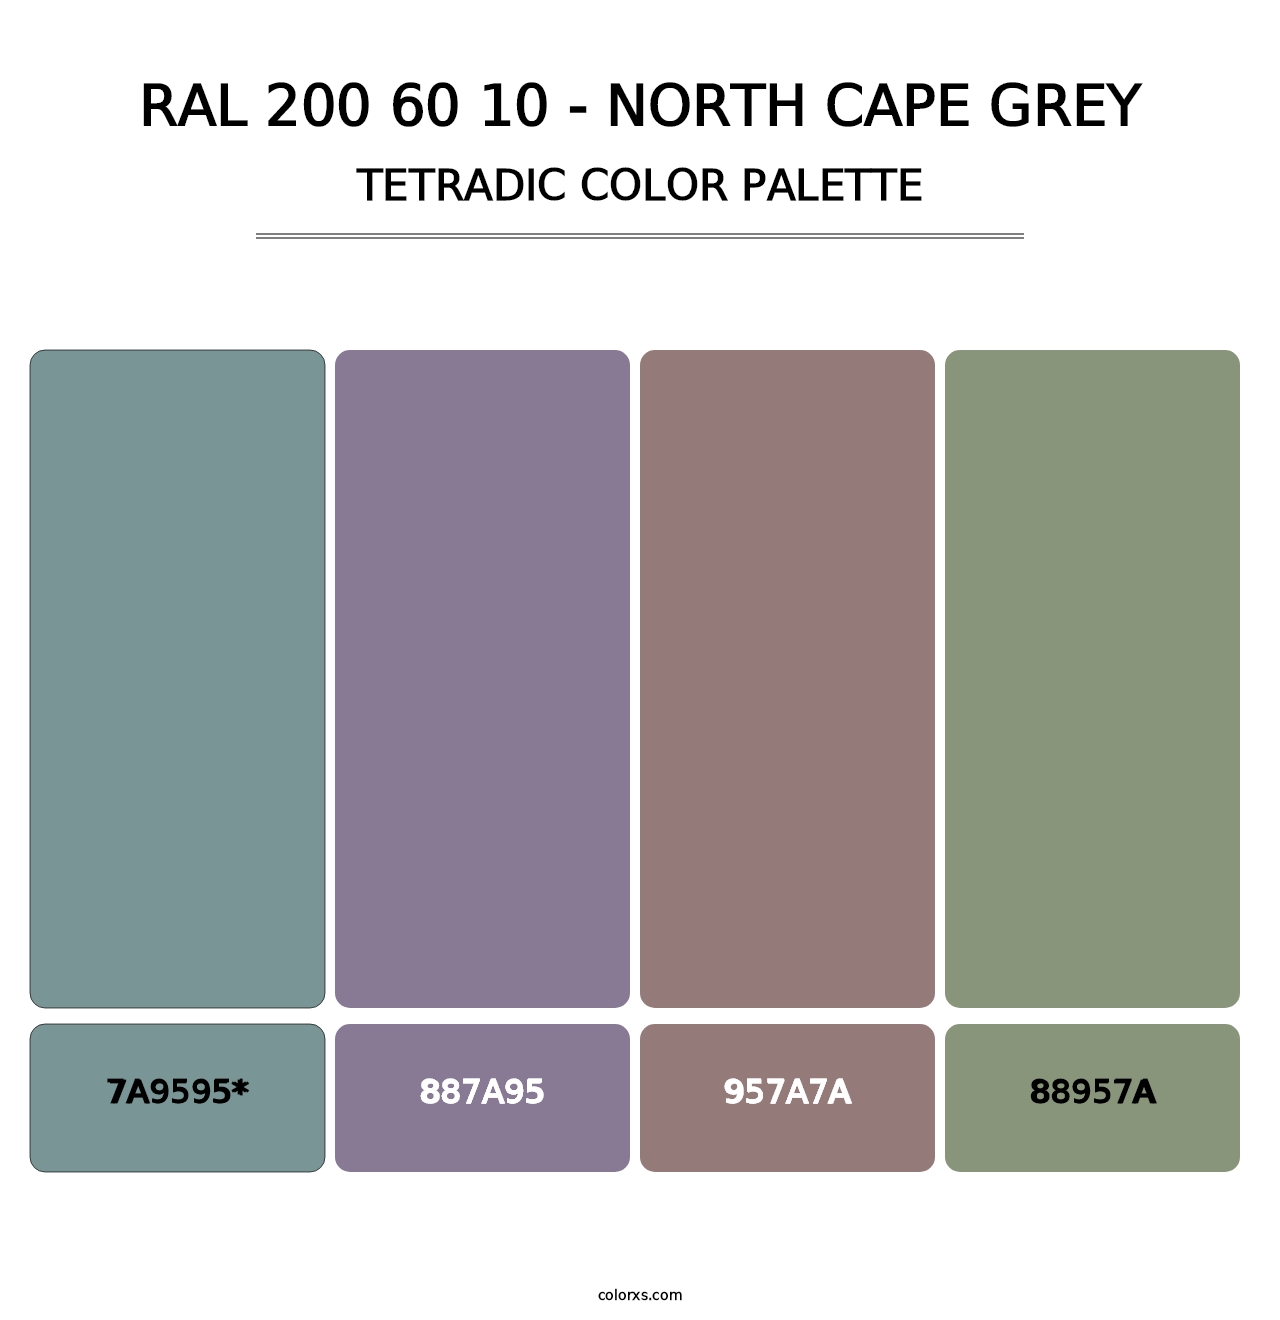 RAL 200 60 10 - North Cape Grey - Tetradic Color Palette